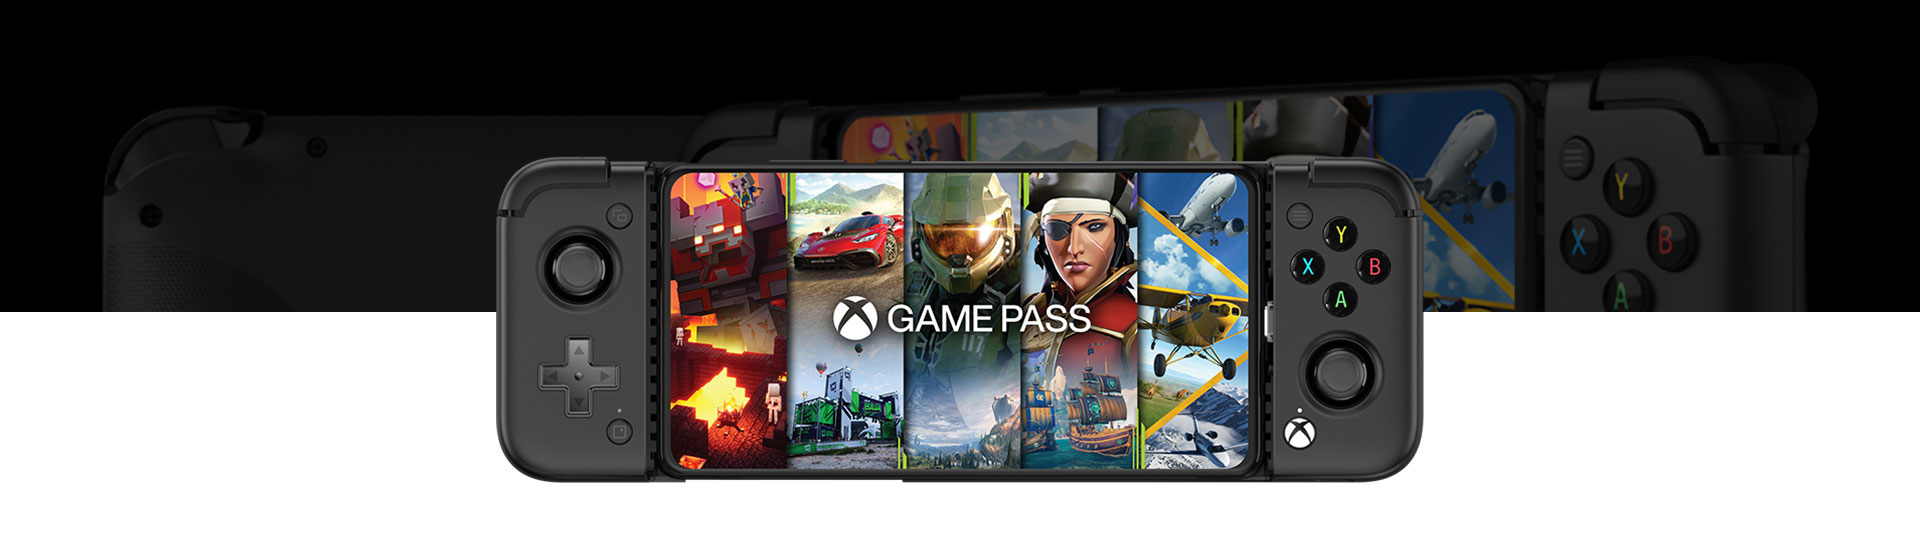 Game Pass を全画面表示した Android 用 GameSir X2 Pro モバイル ゲーム コントローラーを正面から見たビュー。